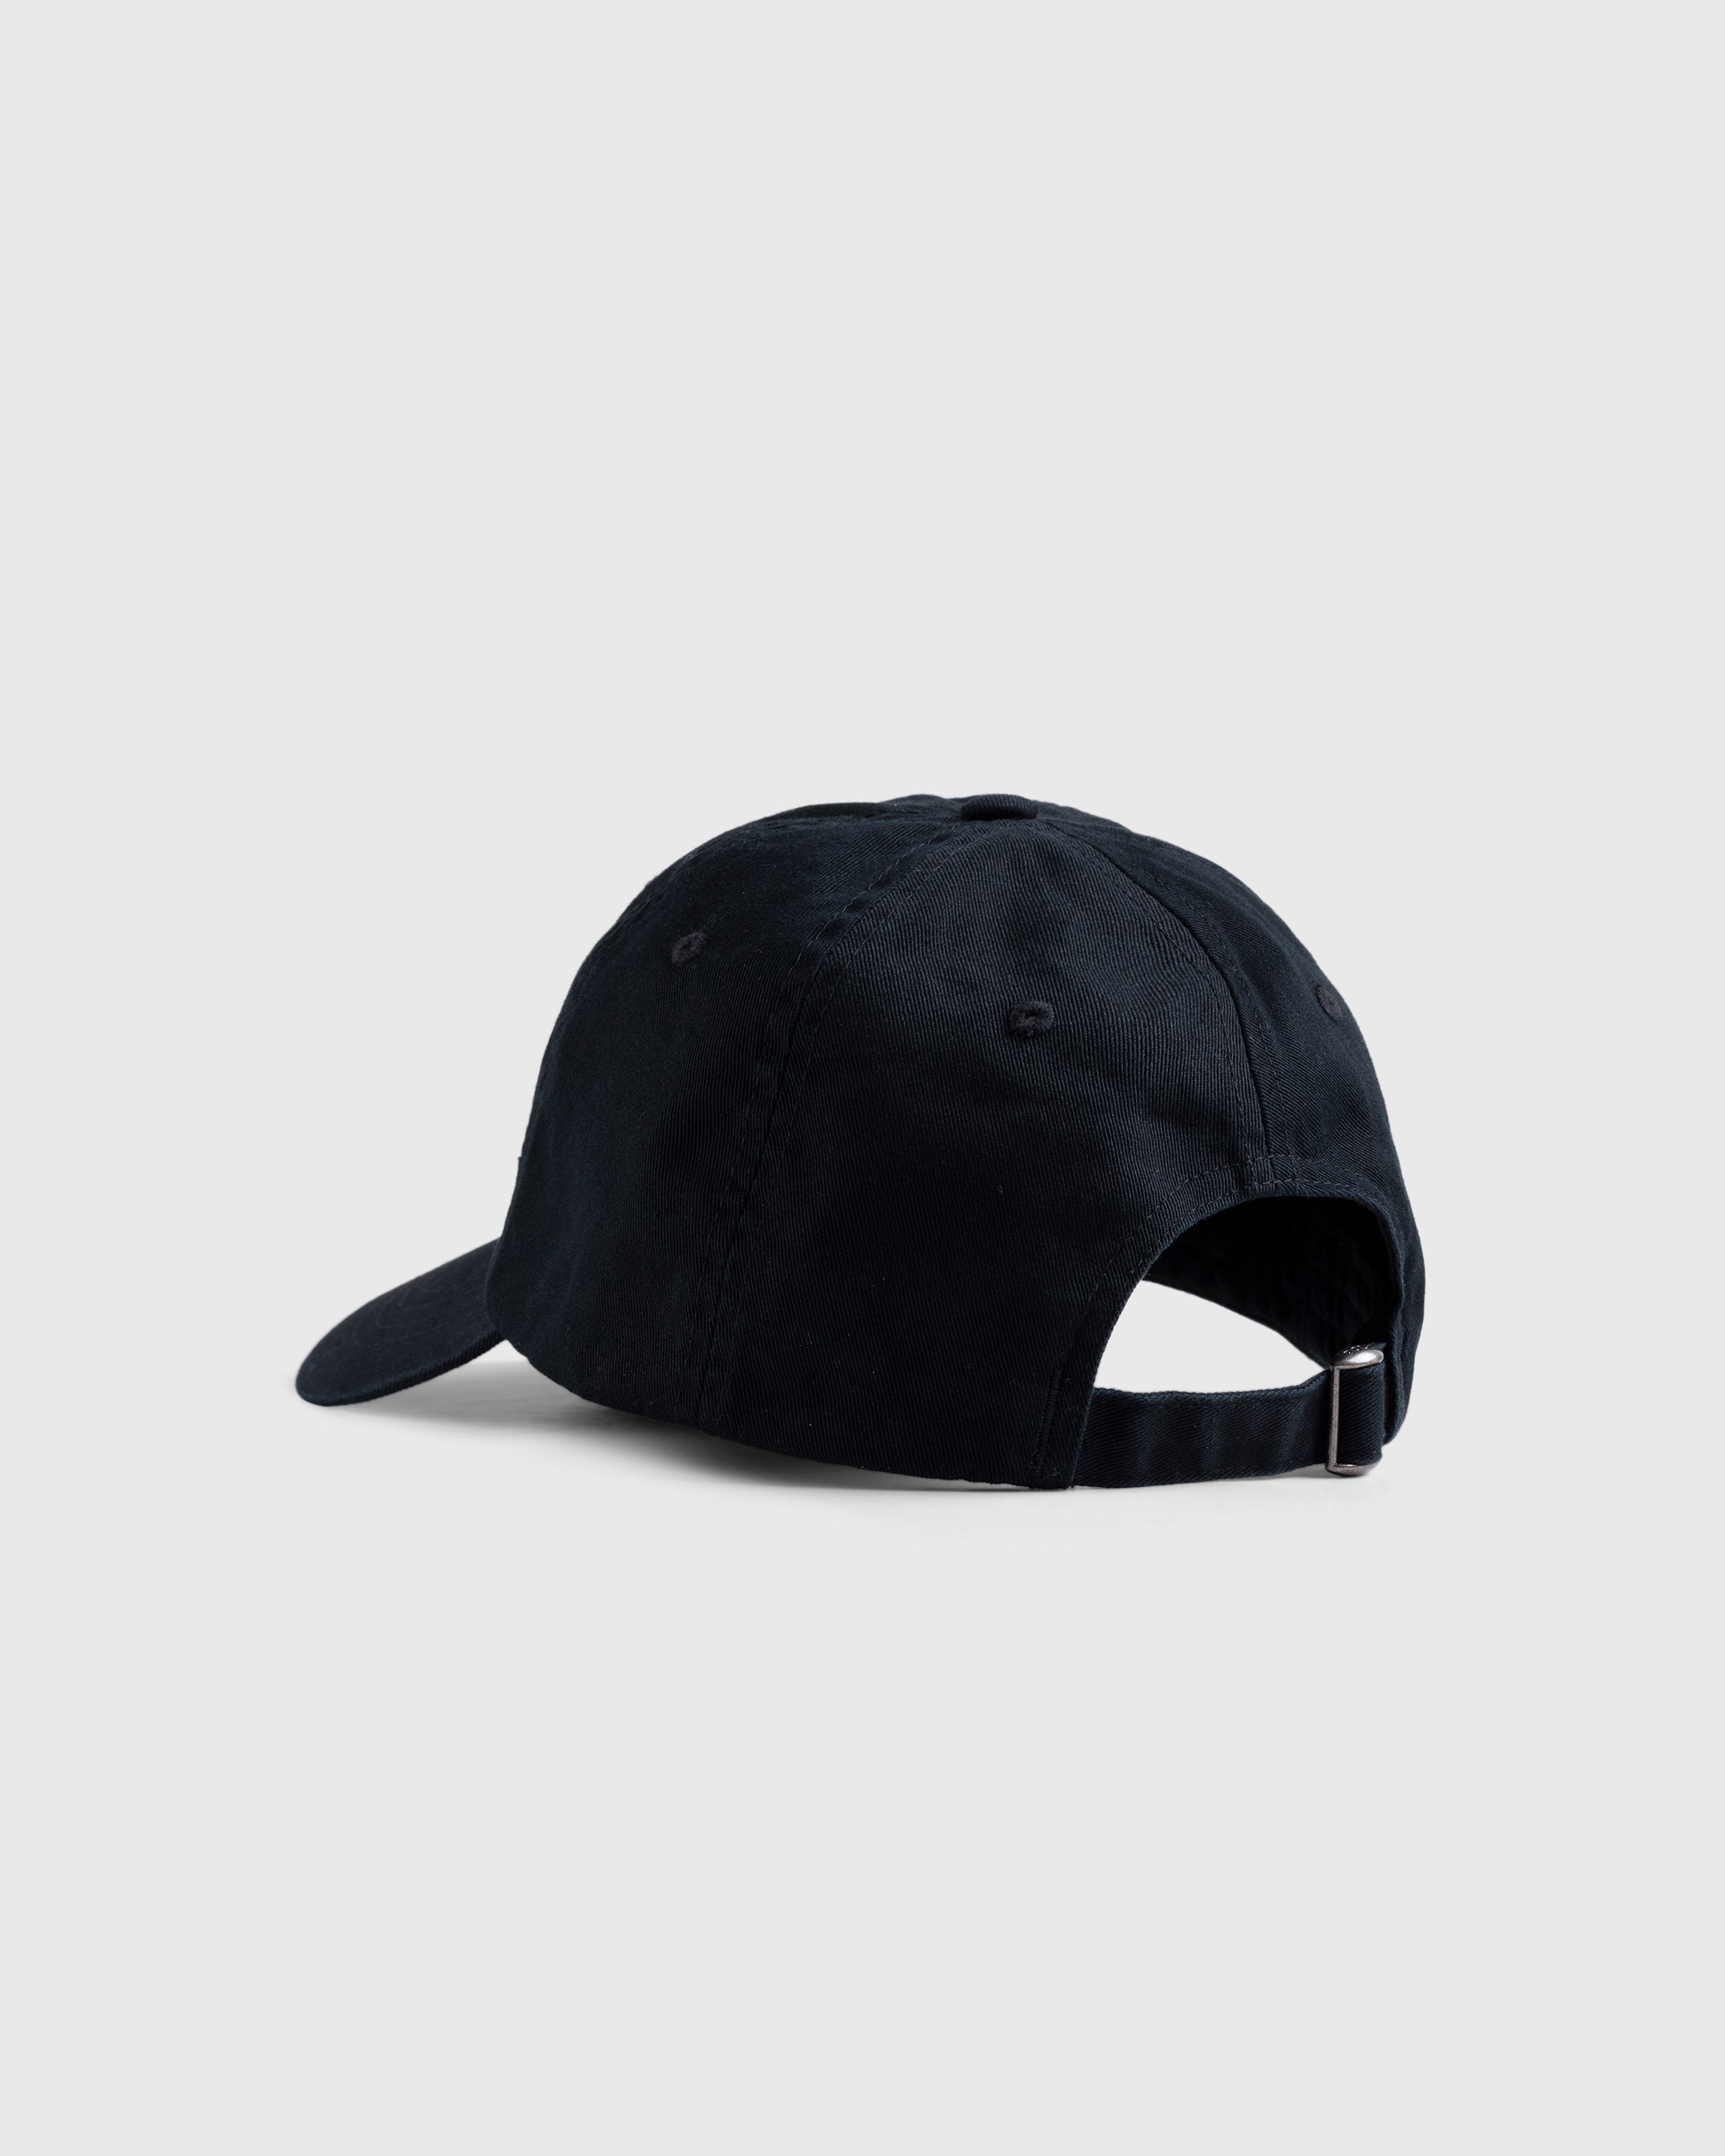 Ralph Lauren x Fortnite - Cap Black - Accessories - Black - Image 3